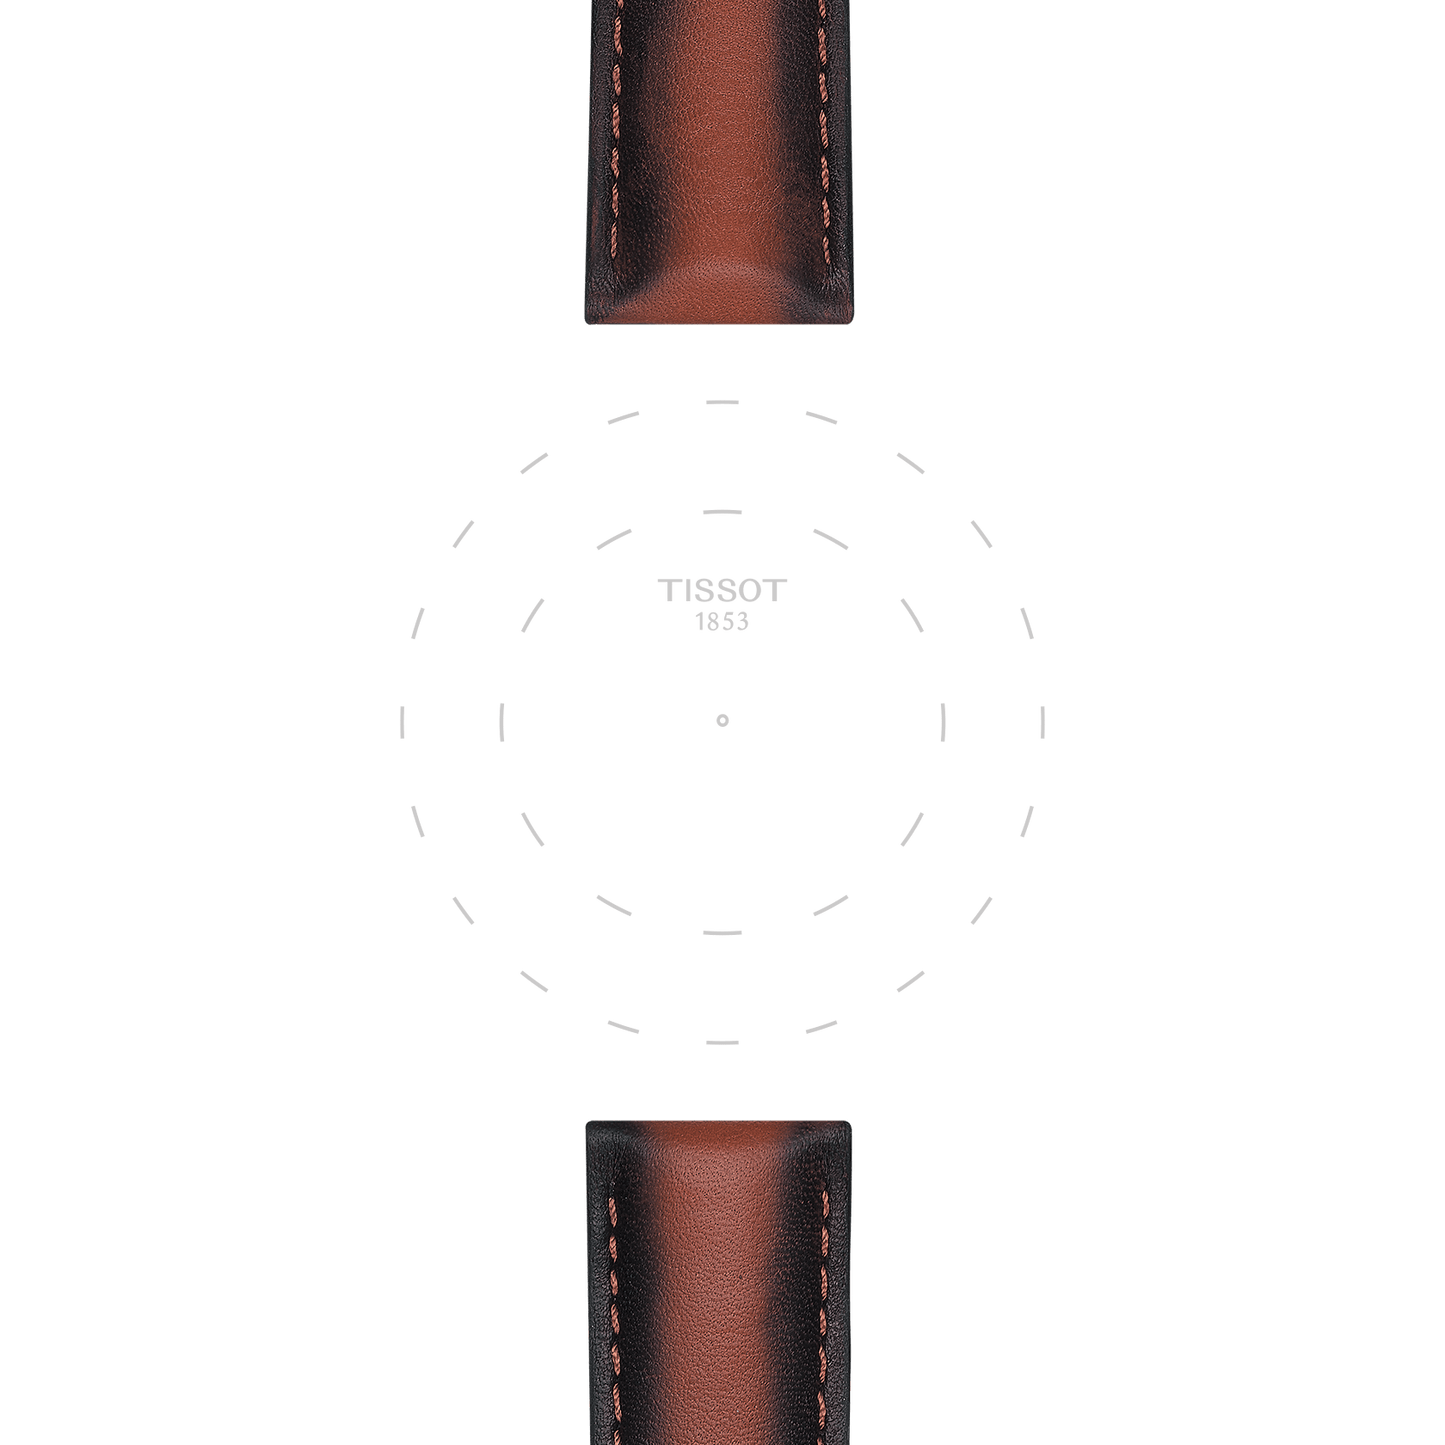 Originele bruine lederen Tissot-band, aanzet 20 mm